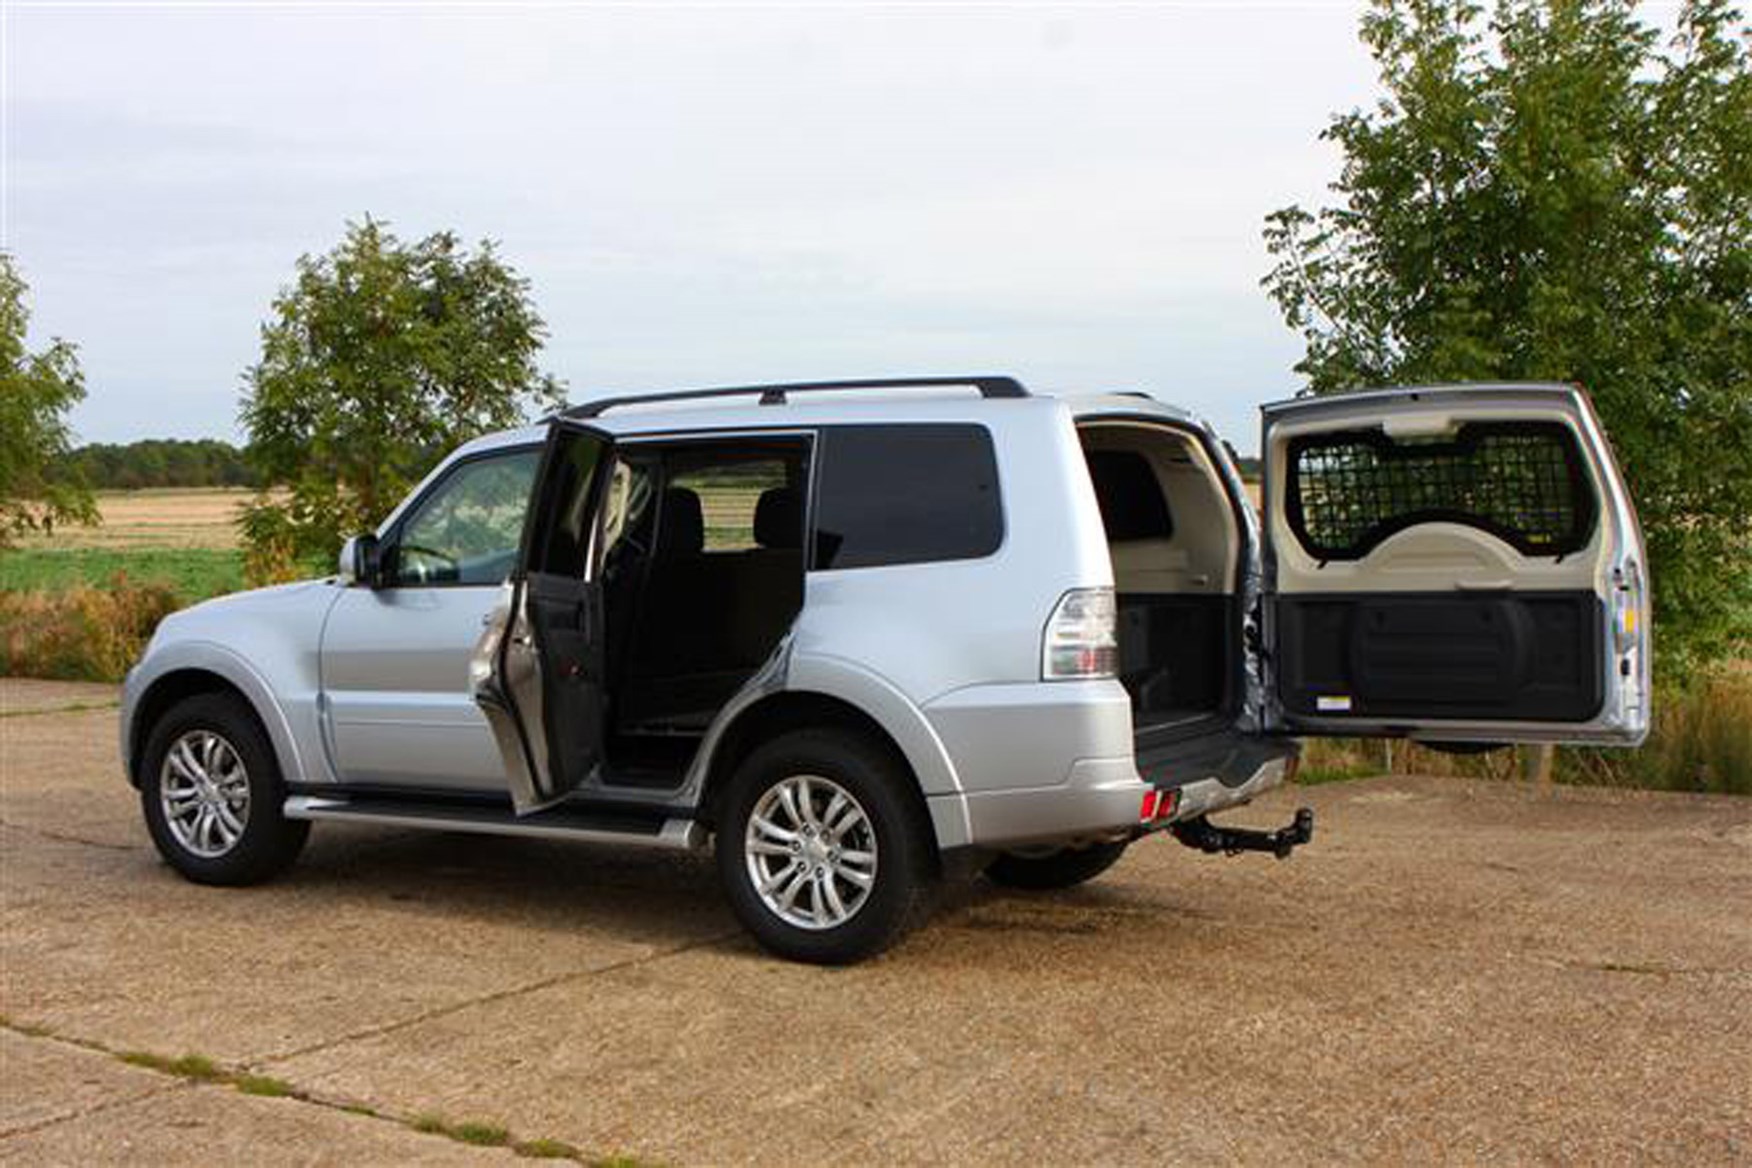 Mitsubishi Shogun review on Parkers Vans - load area acces